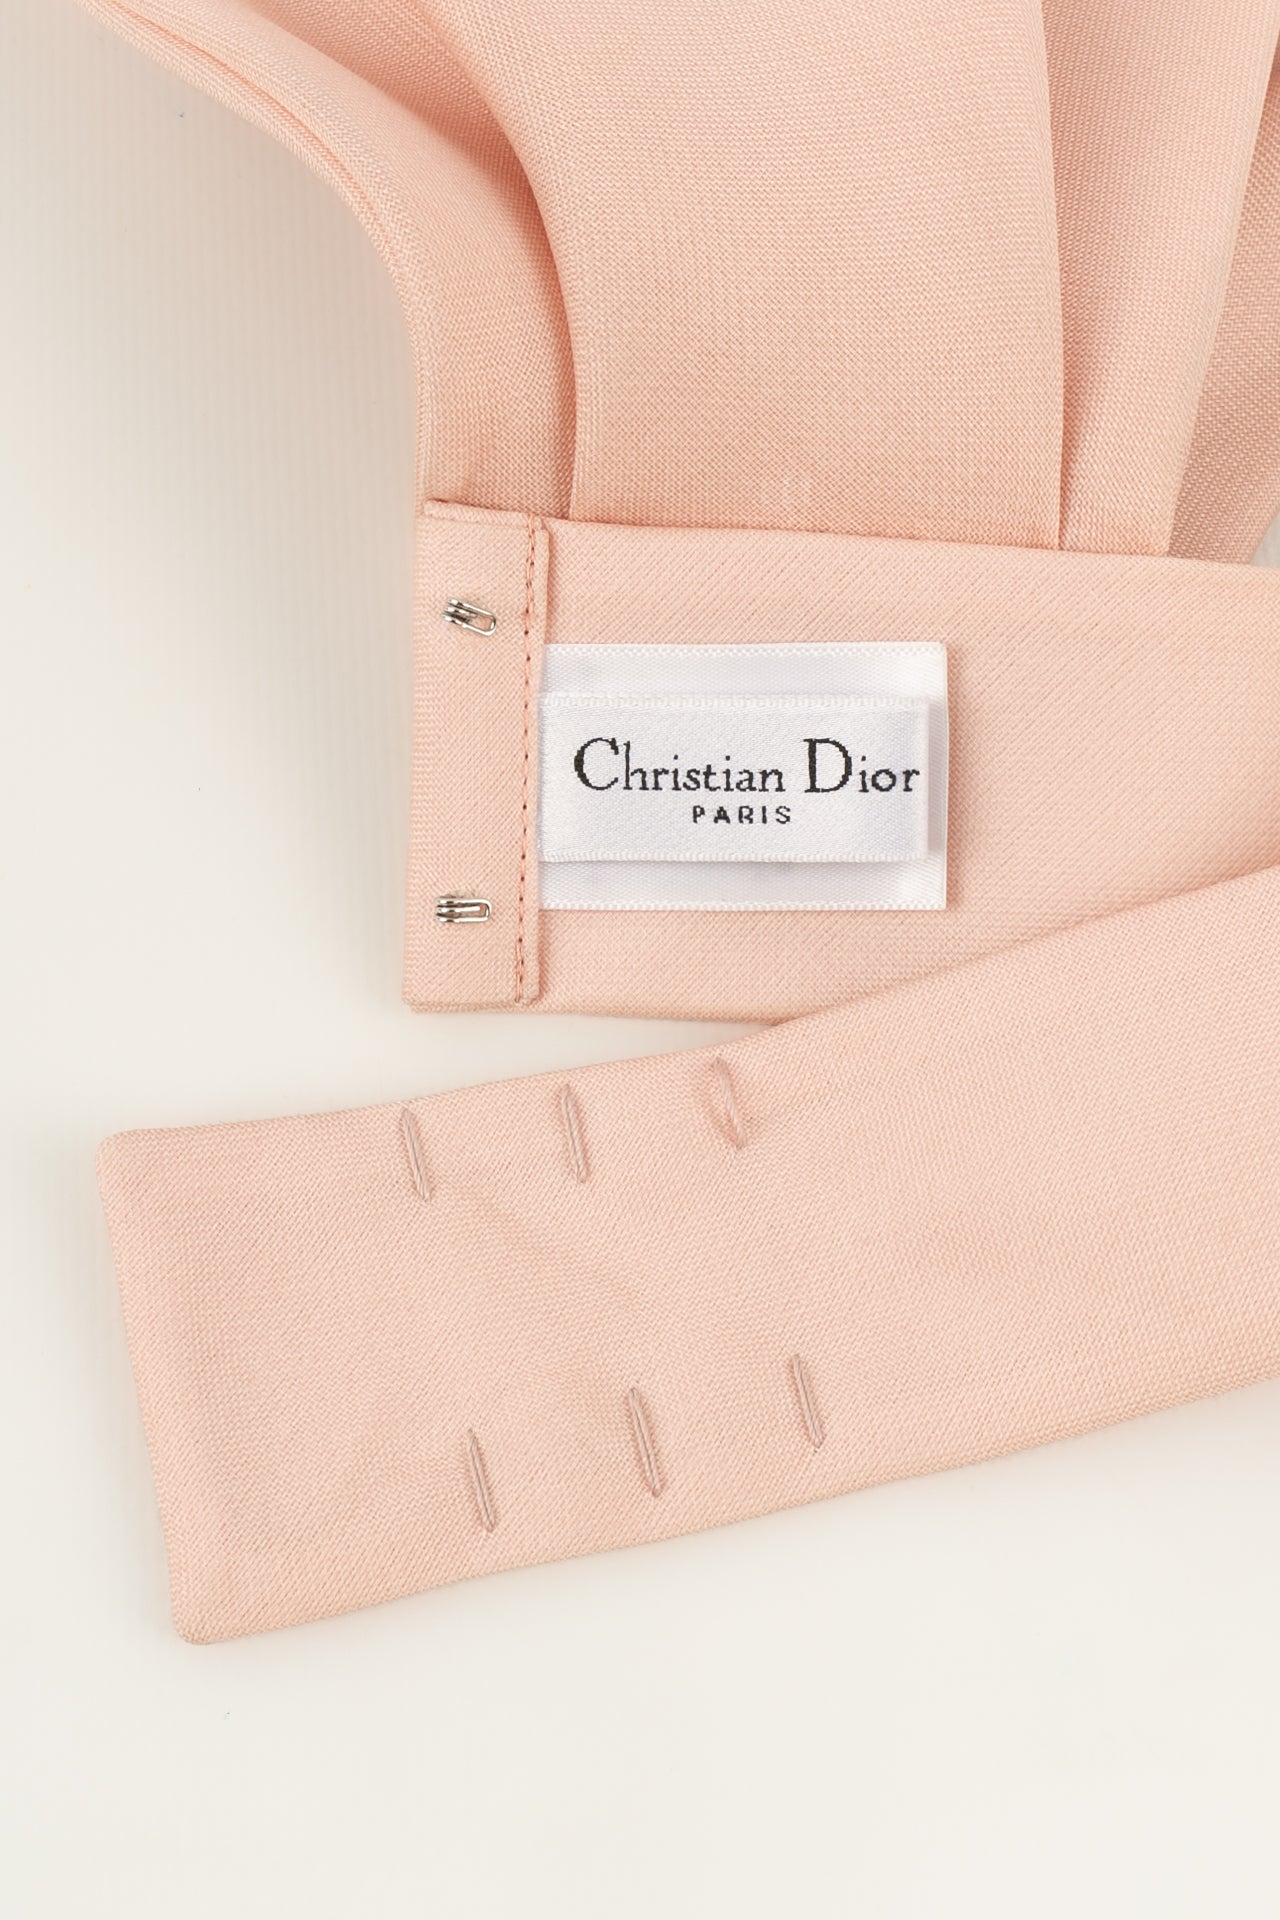 Cravate ascot Christian Dior 